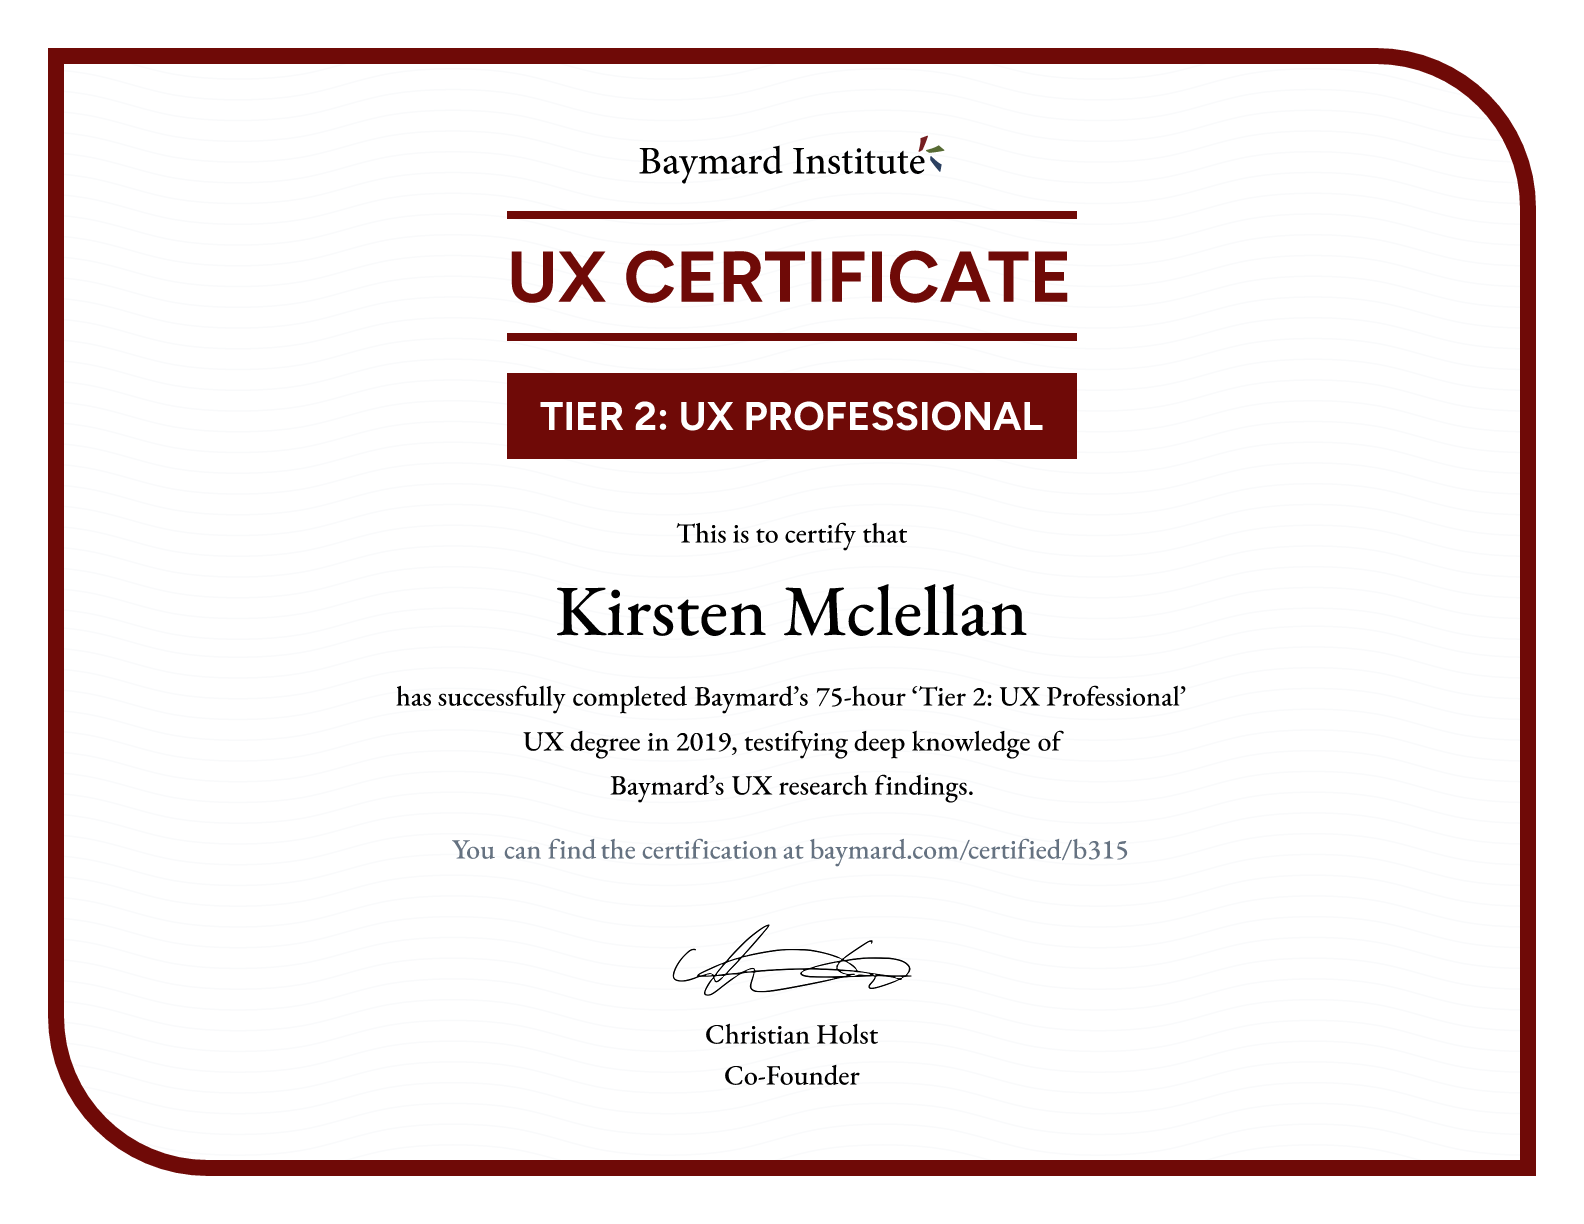 Kirsten Mclellan’s certificate